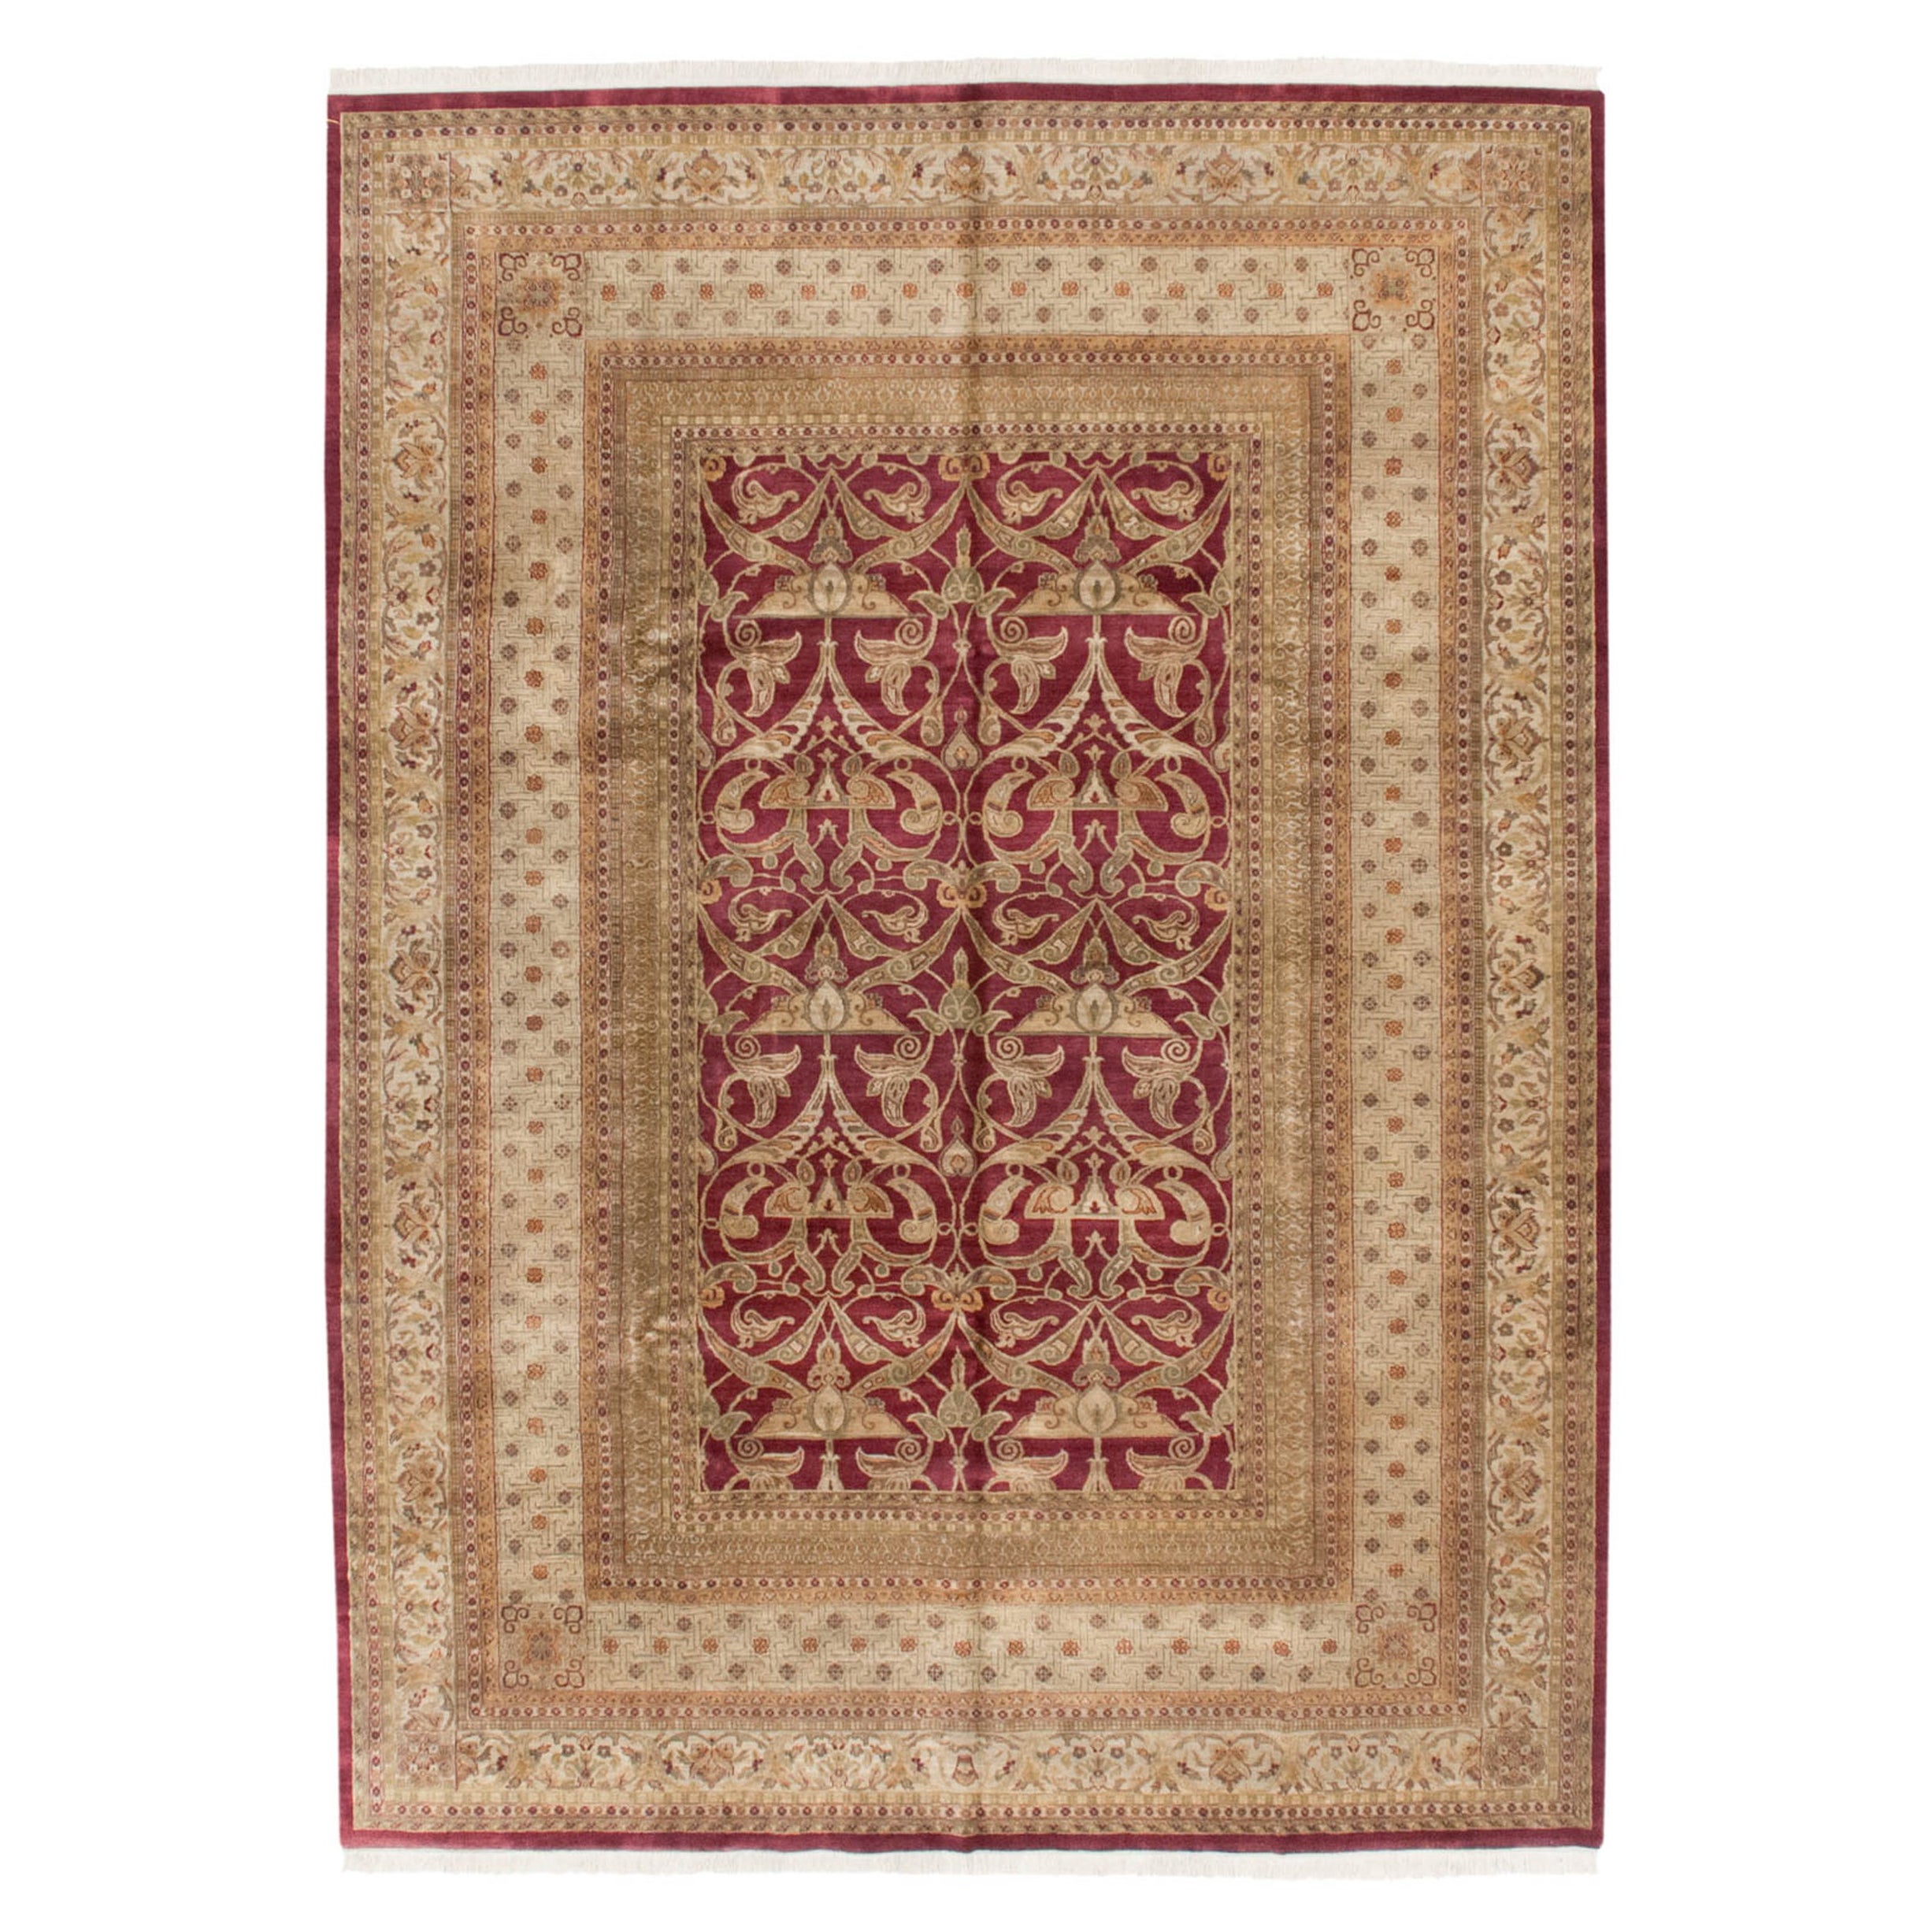 Indischer Jugendstil-Teppich im Art nouveau-Stil im Angebot